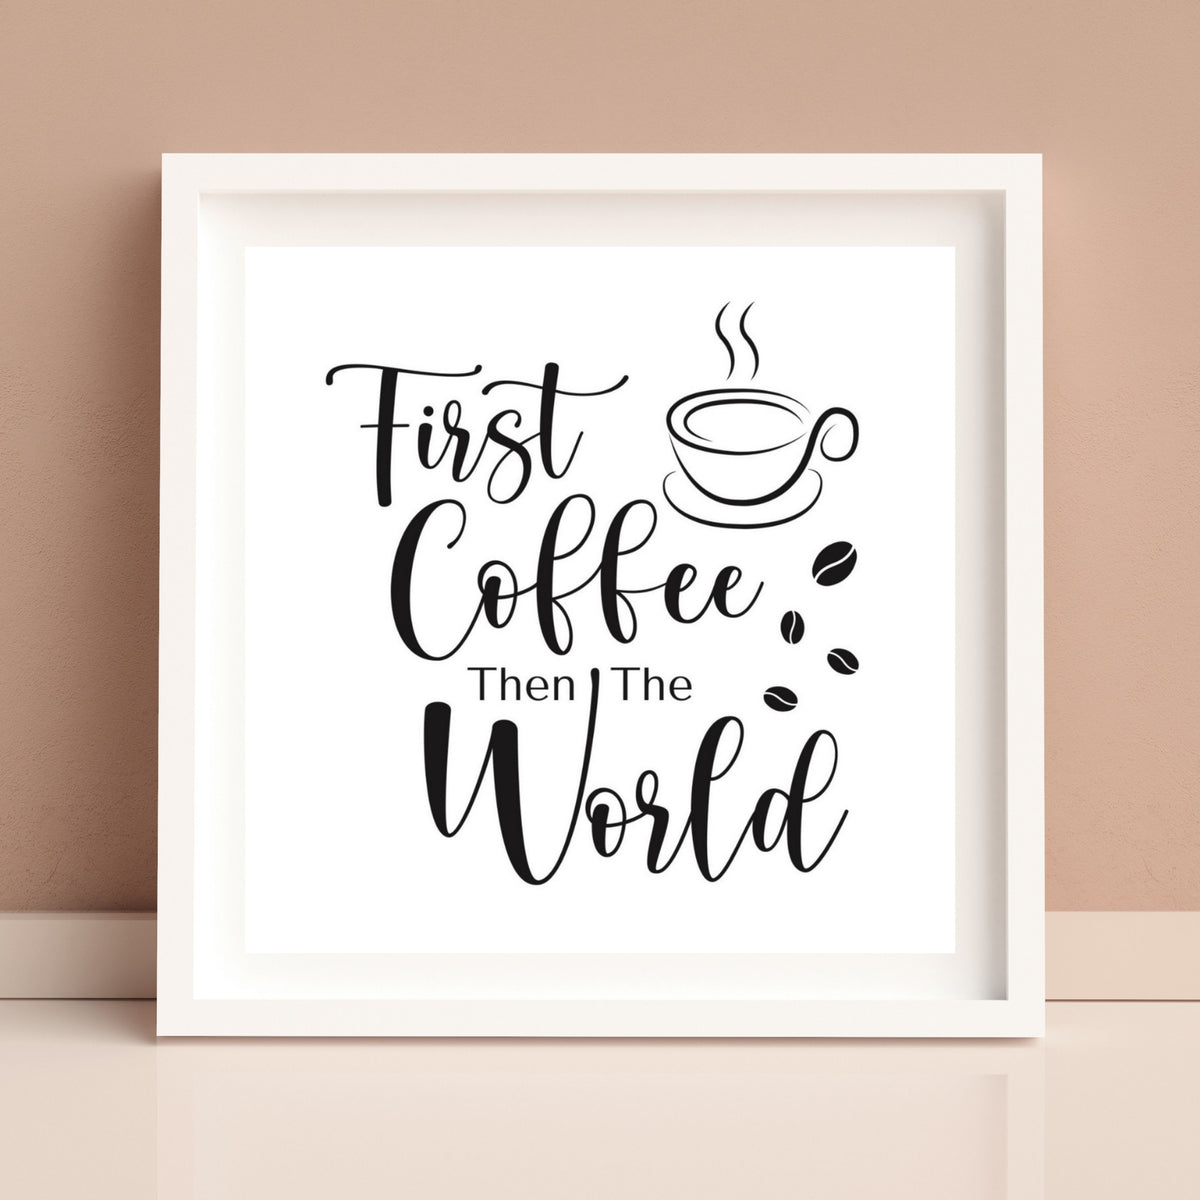 But First, Coffee (Digital Print)